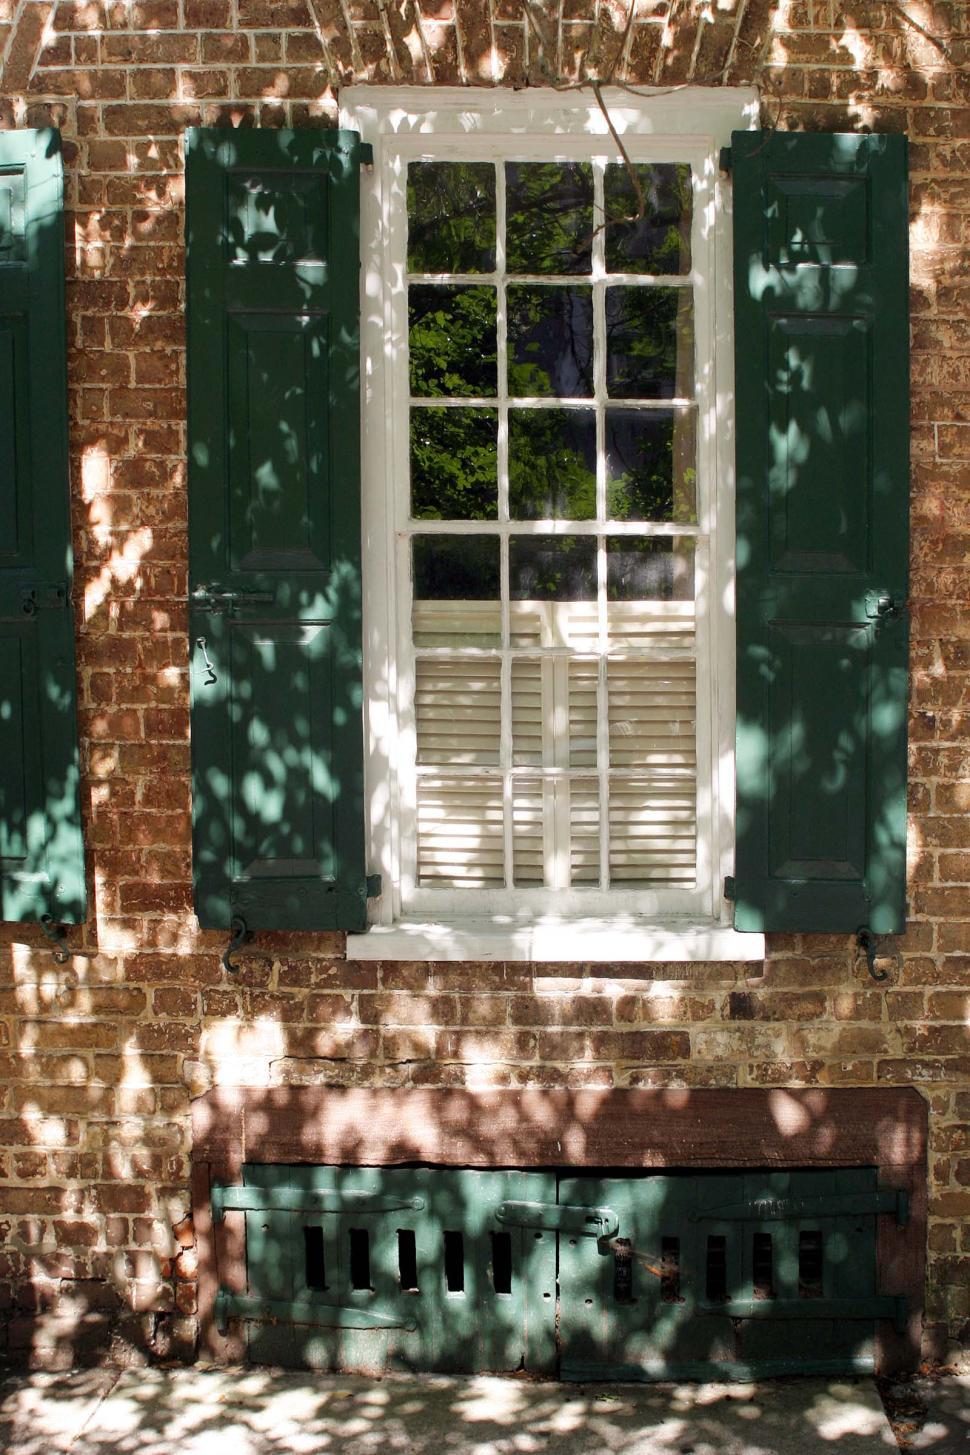 Free Image of window shutters brick wall charleston south carolina basement shadows exterior 